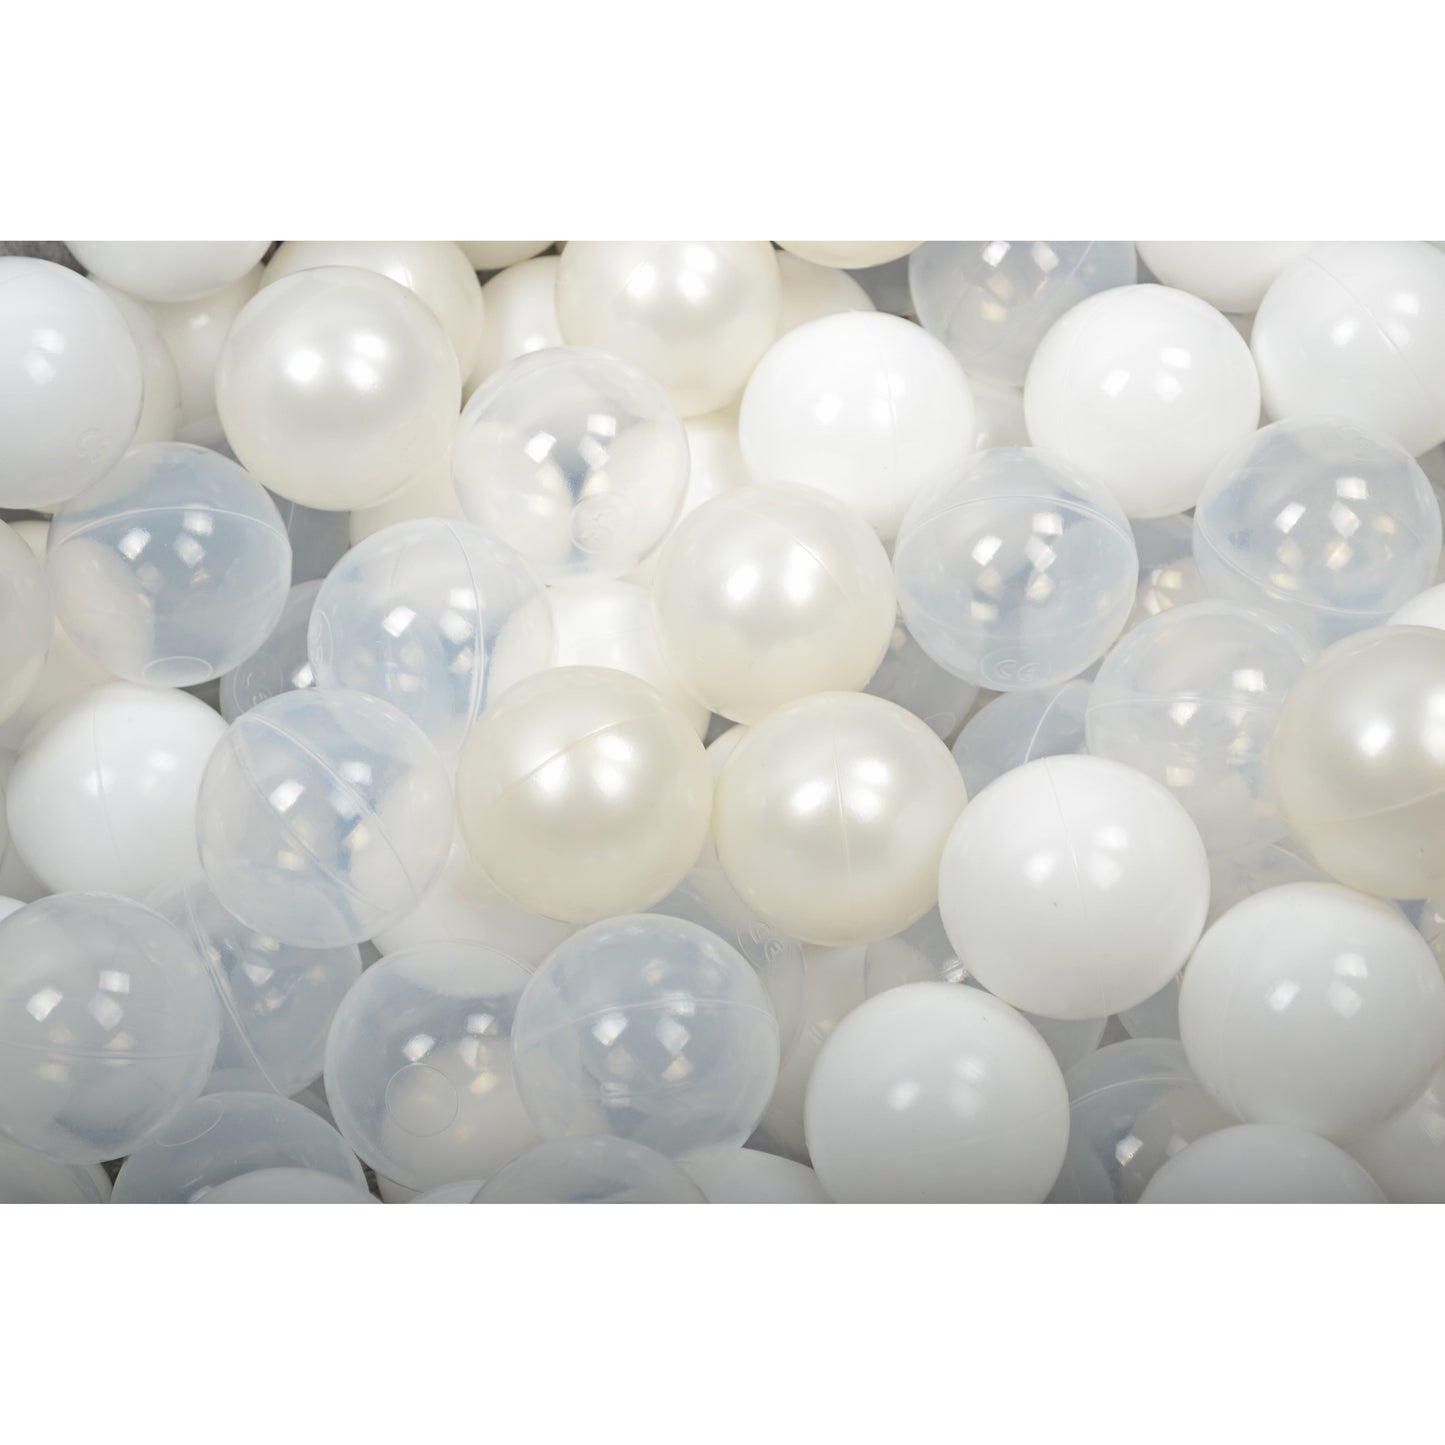 Velvet Corduroy Sand Round Foam Ball Pit - Select Your Own Balls